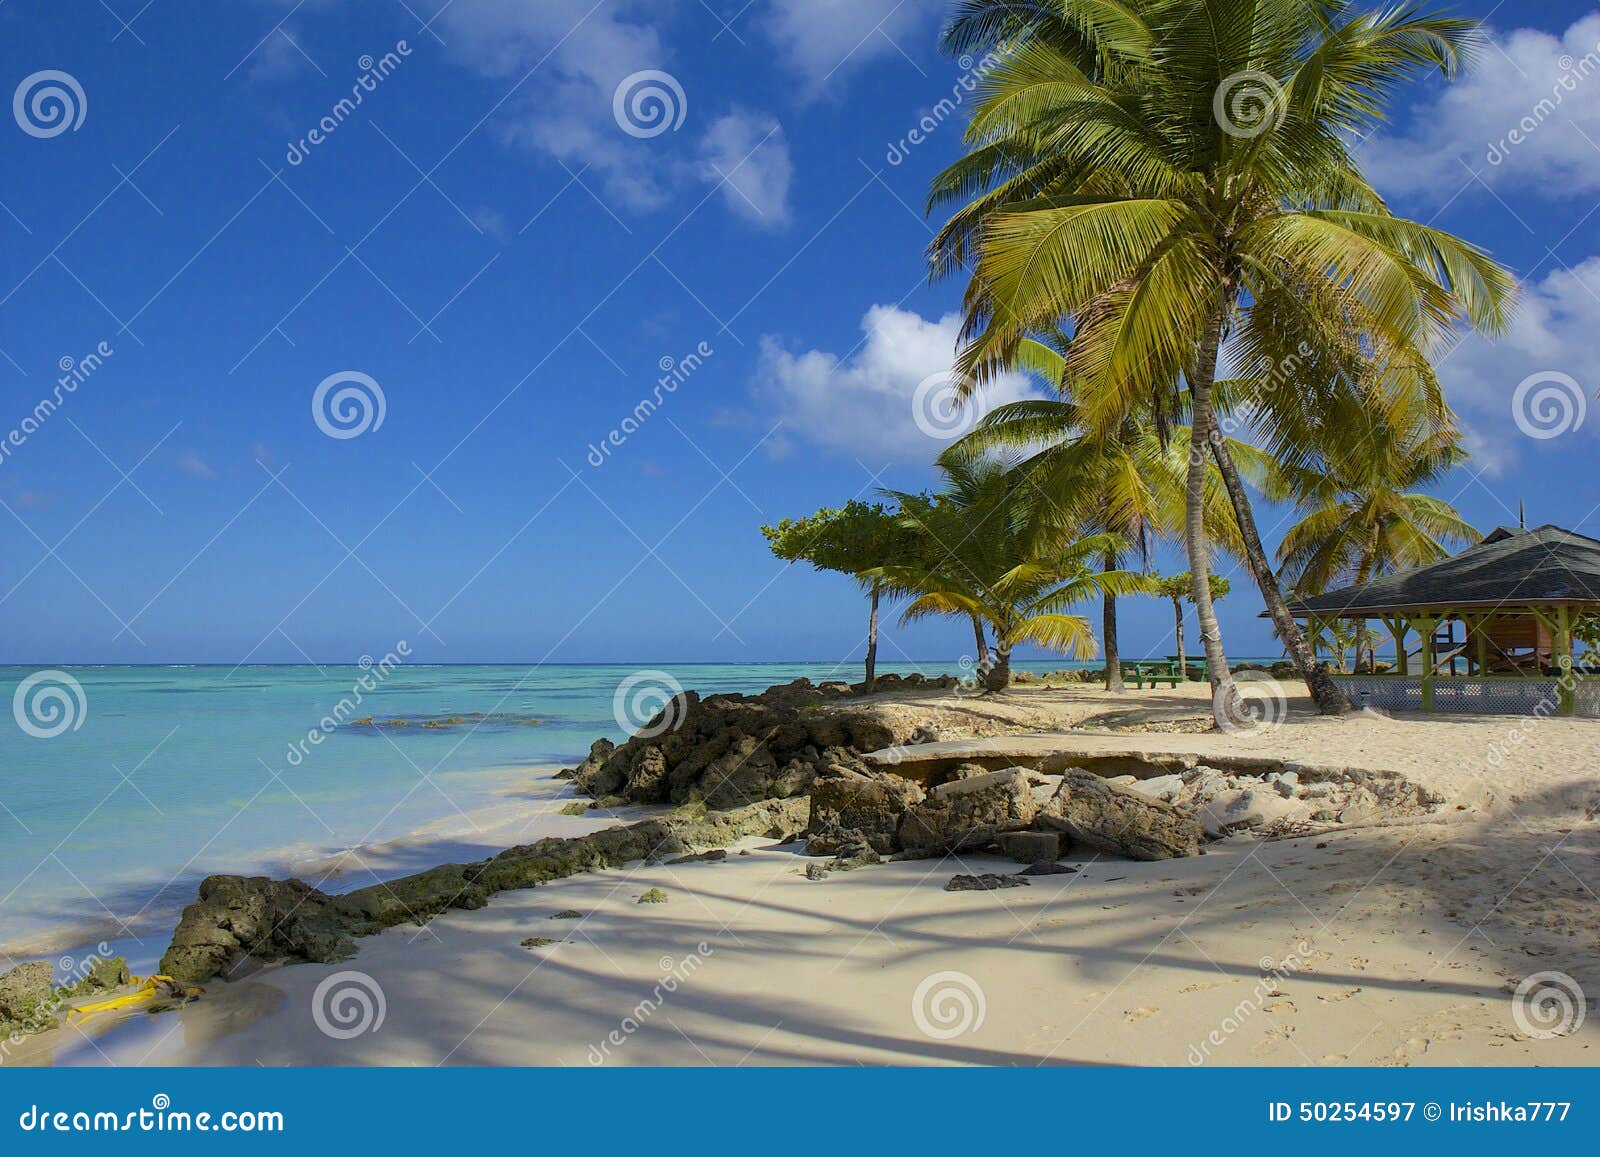 tobago beach, caribbean